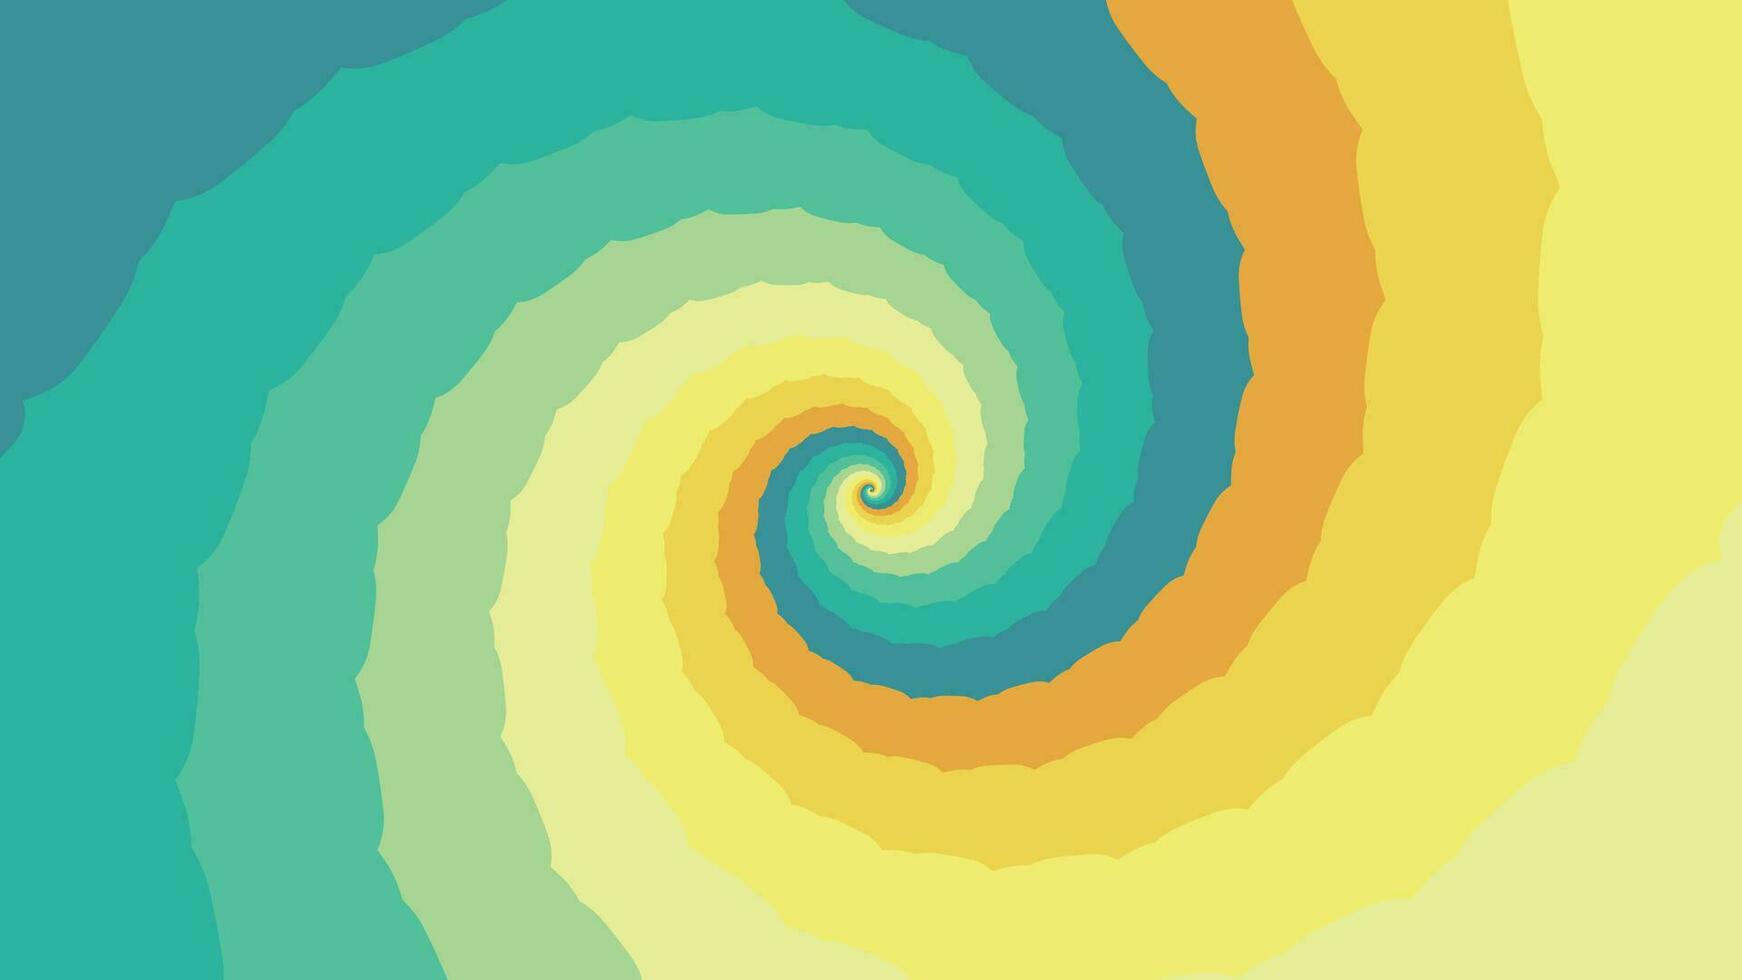 Abstract spiral spinning vortex creative style background. vector